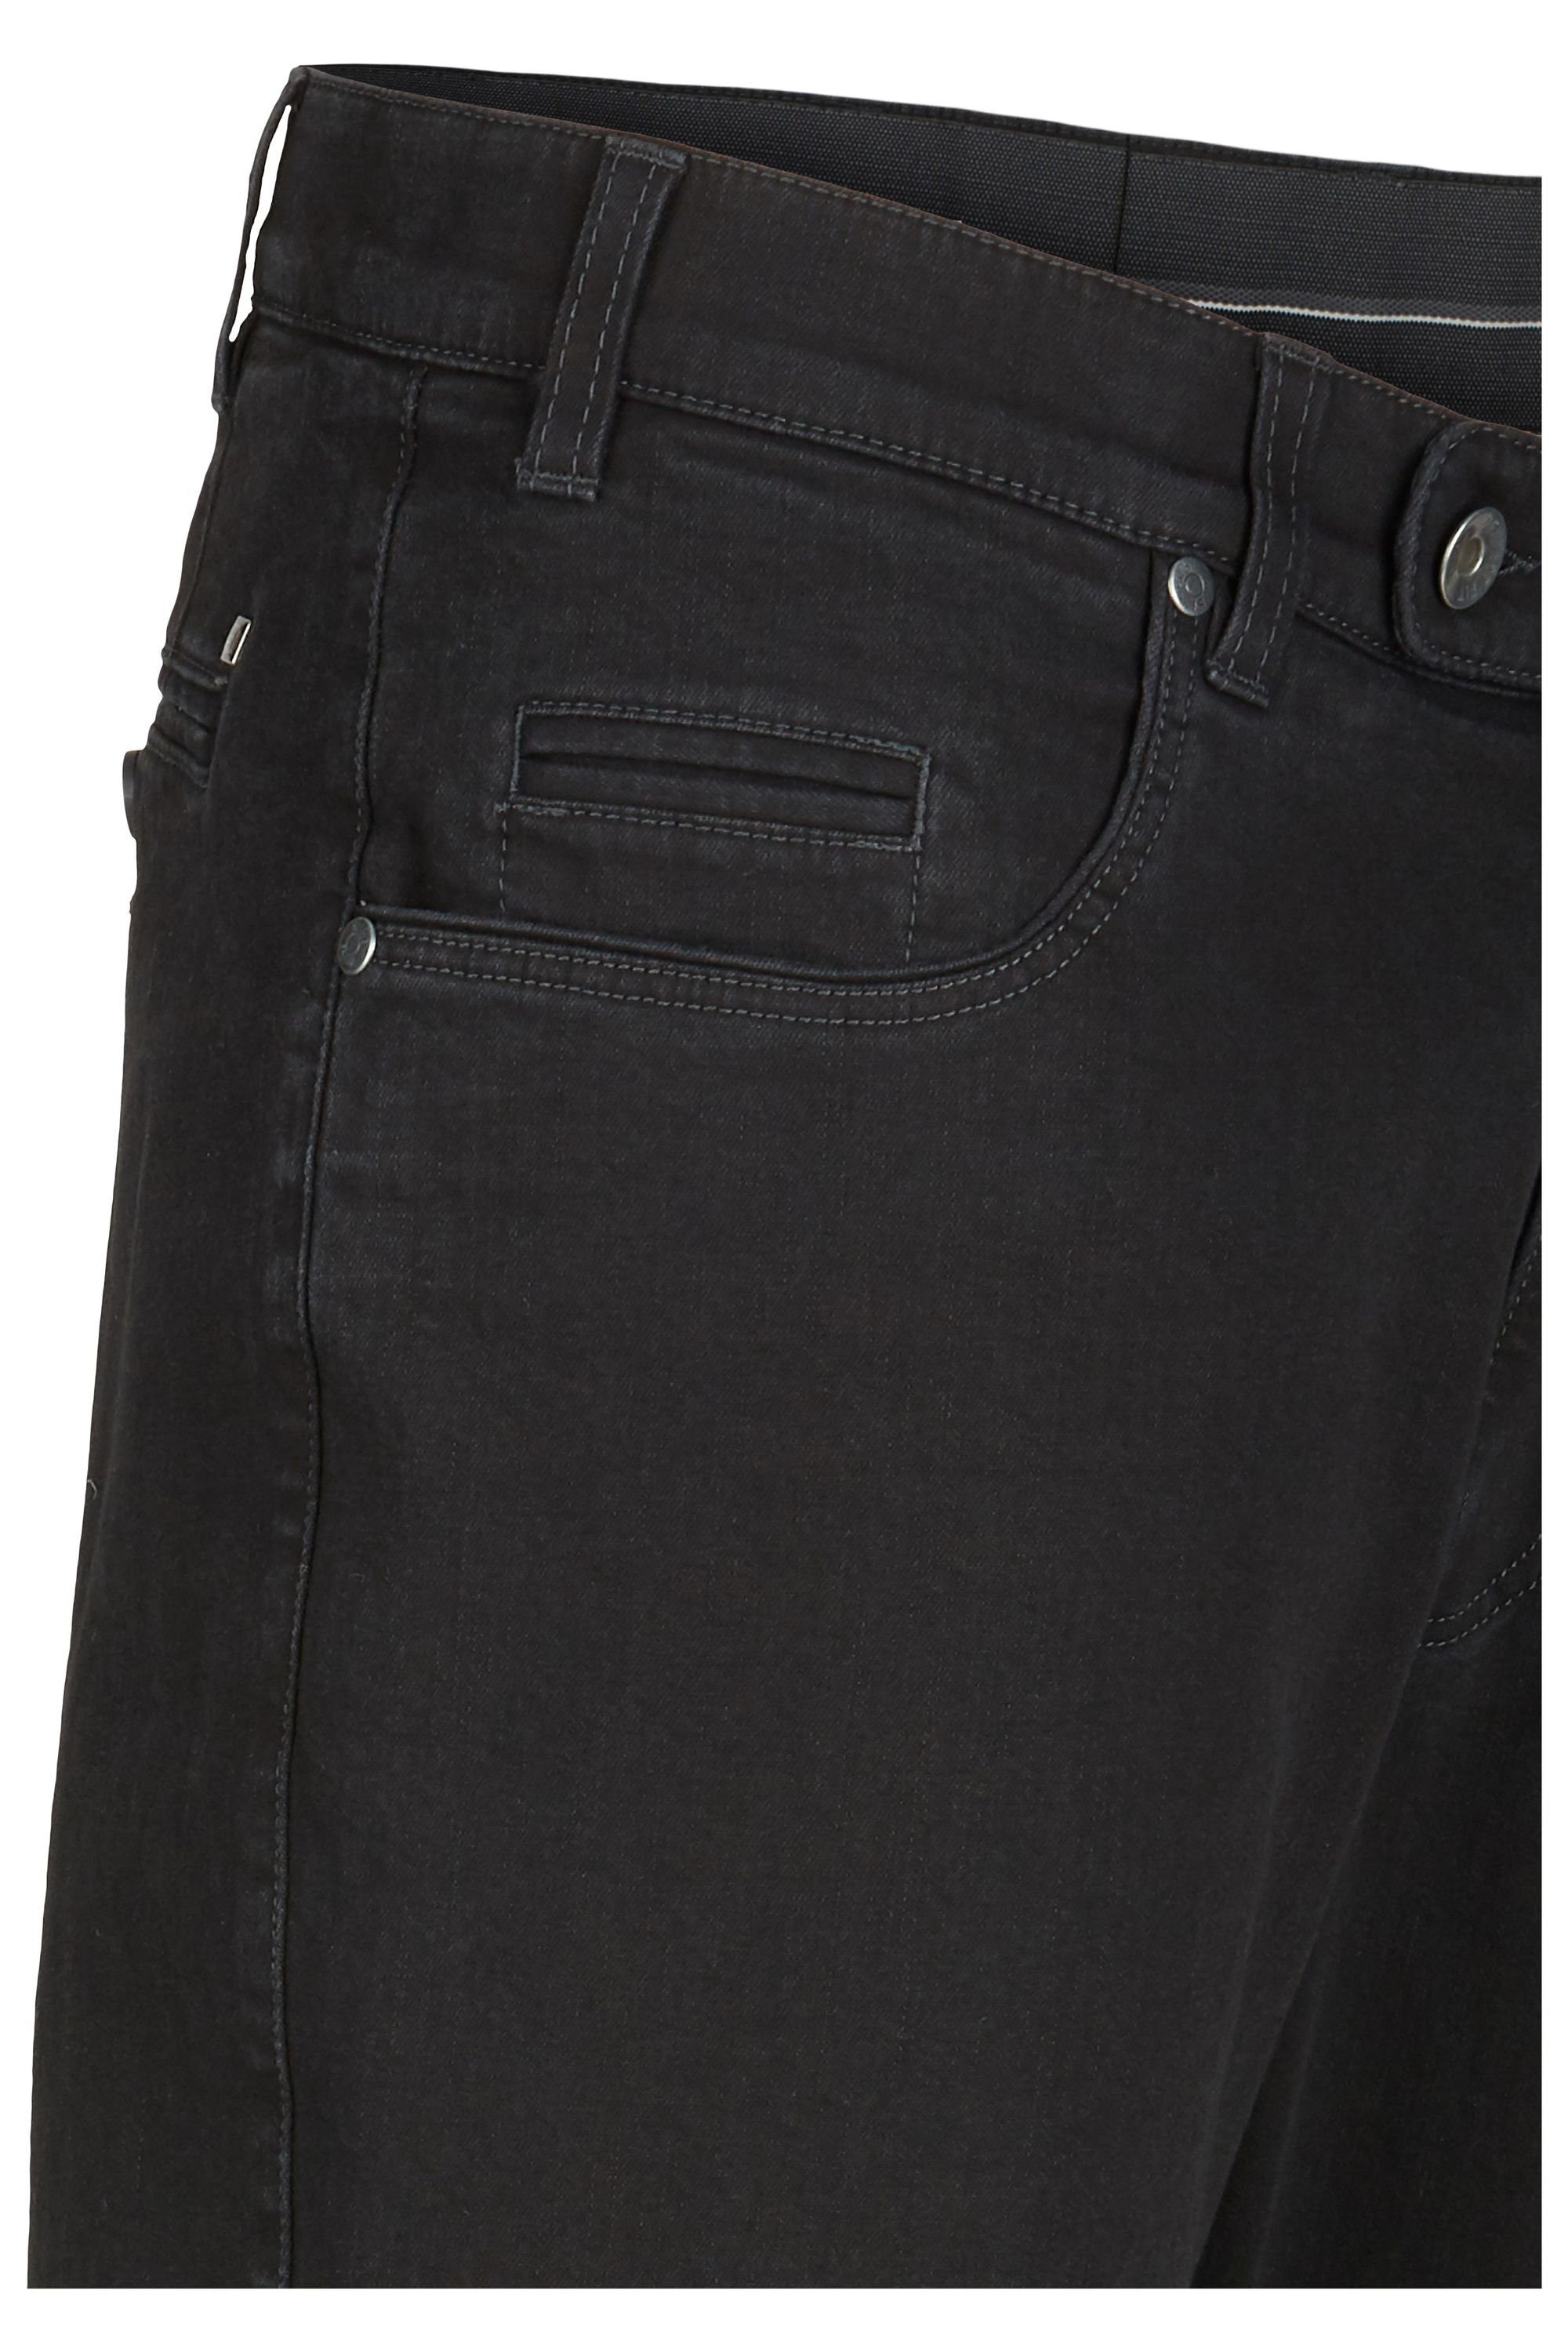 (50) Fit Perfect Stretch Herren aubi: Bequeme 577 Jeans aubi Hose Modell black Jeans